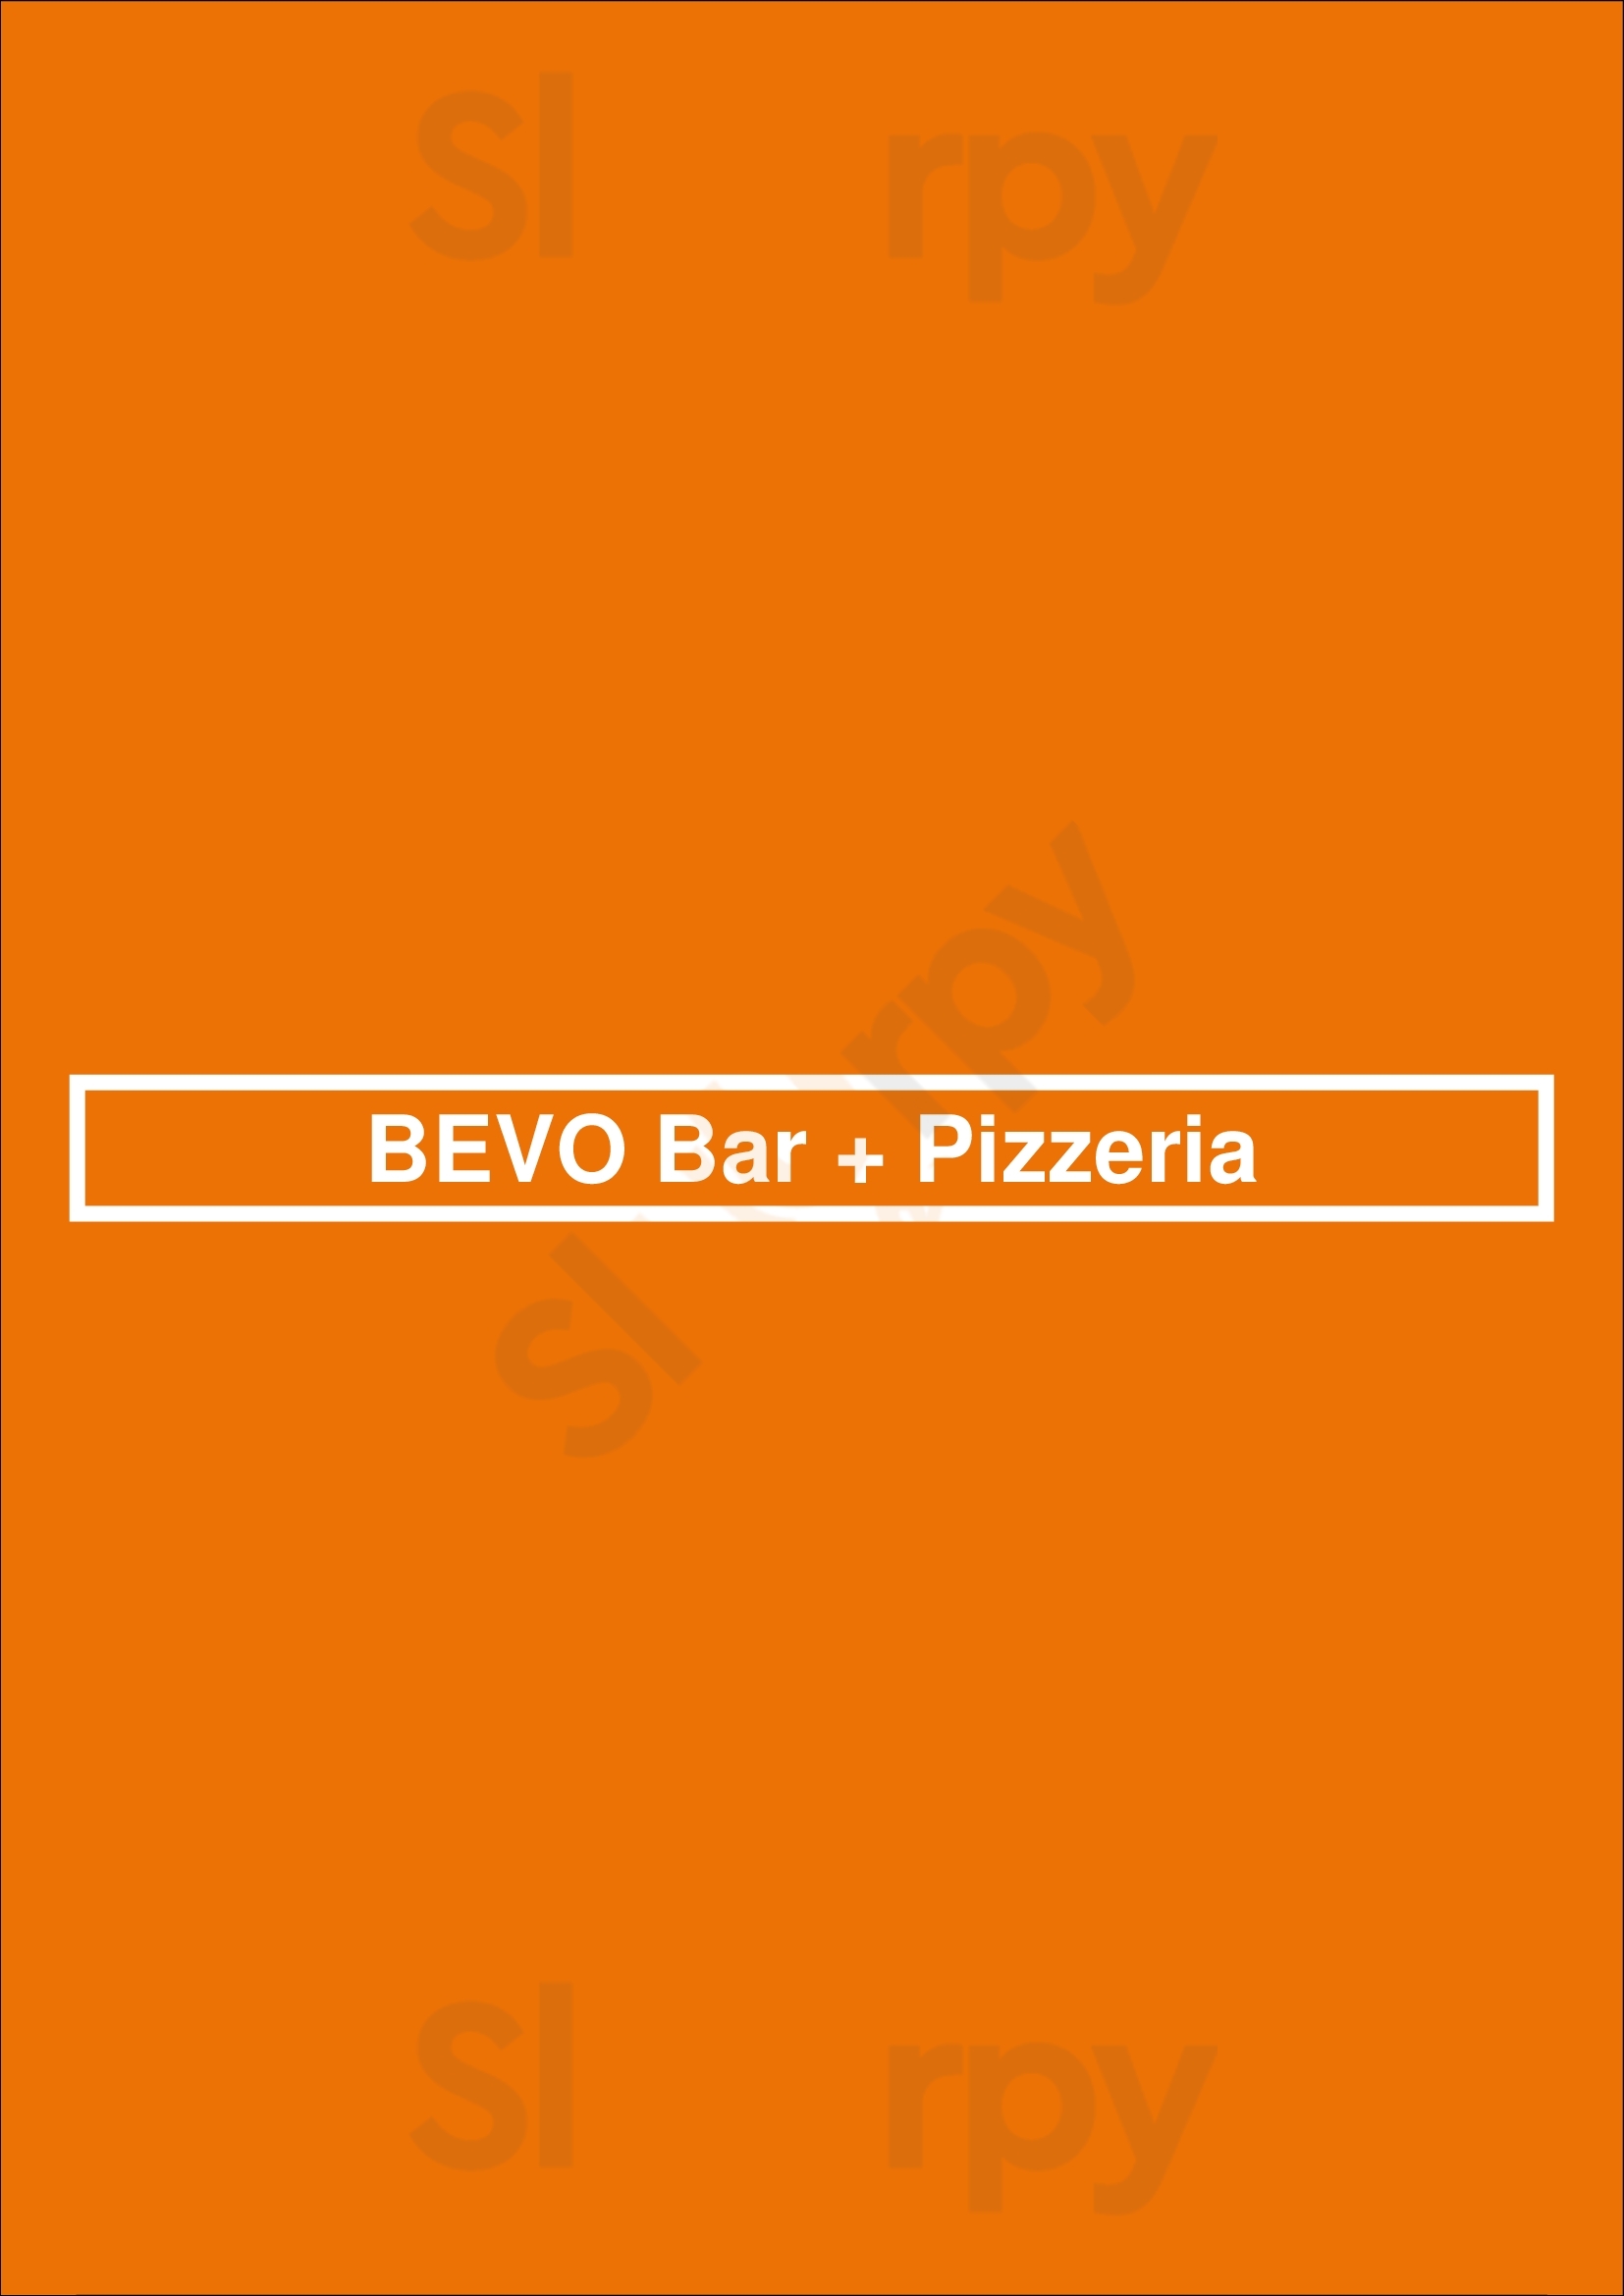 Bevo Bar + Pizzeria Montreal Menu - 1